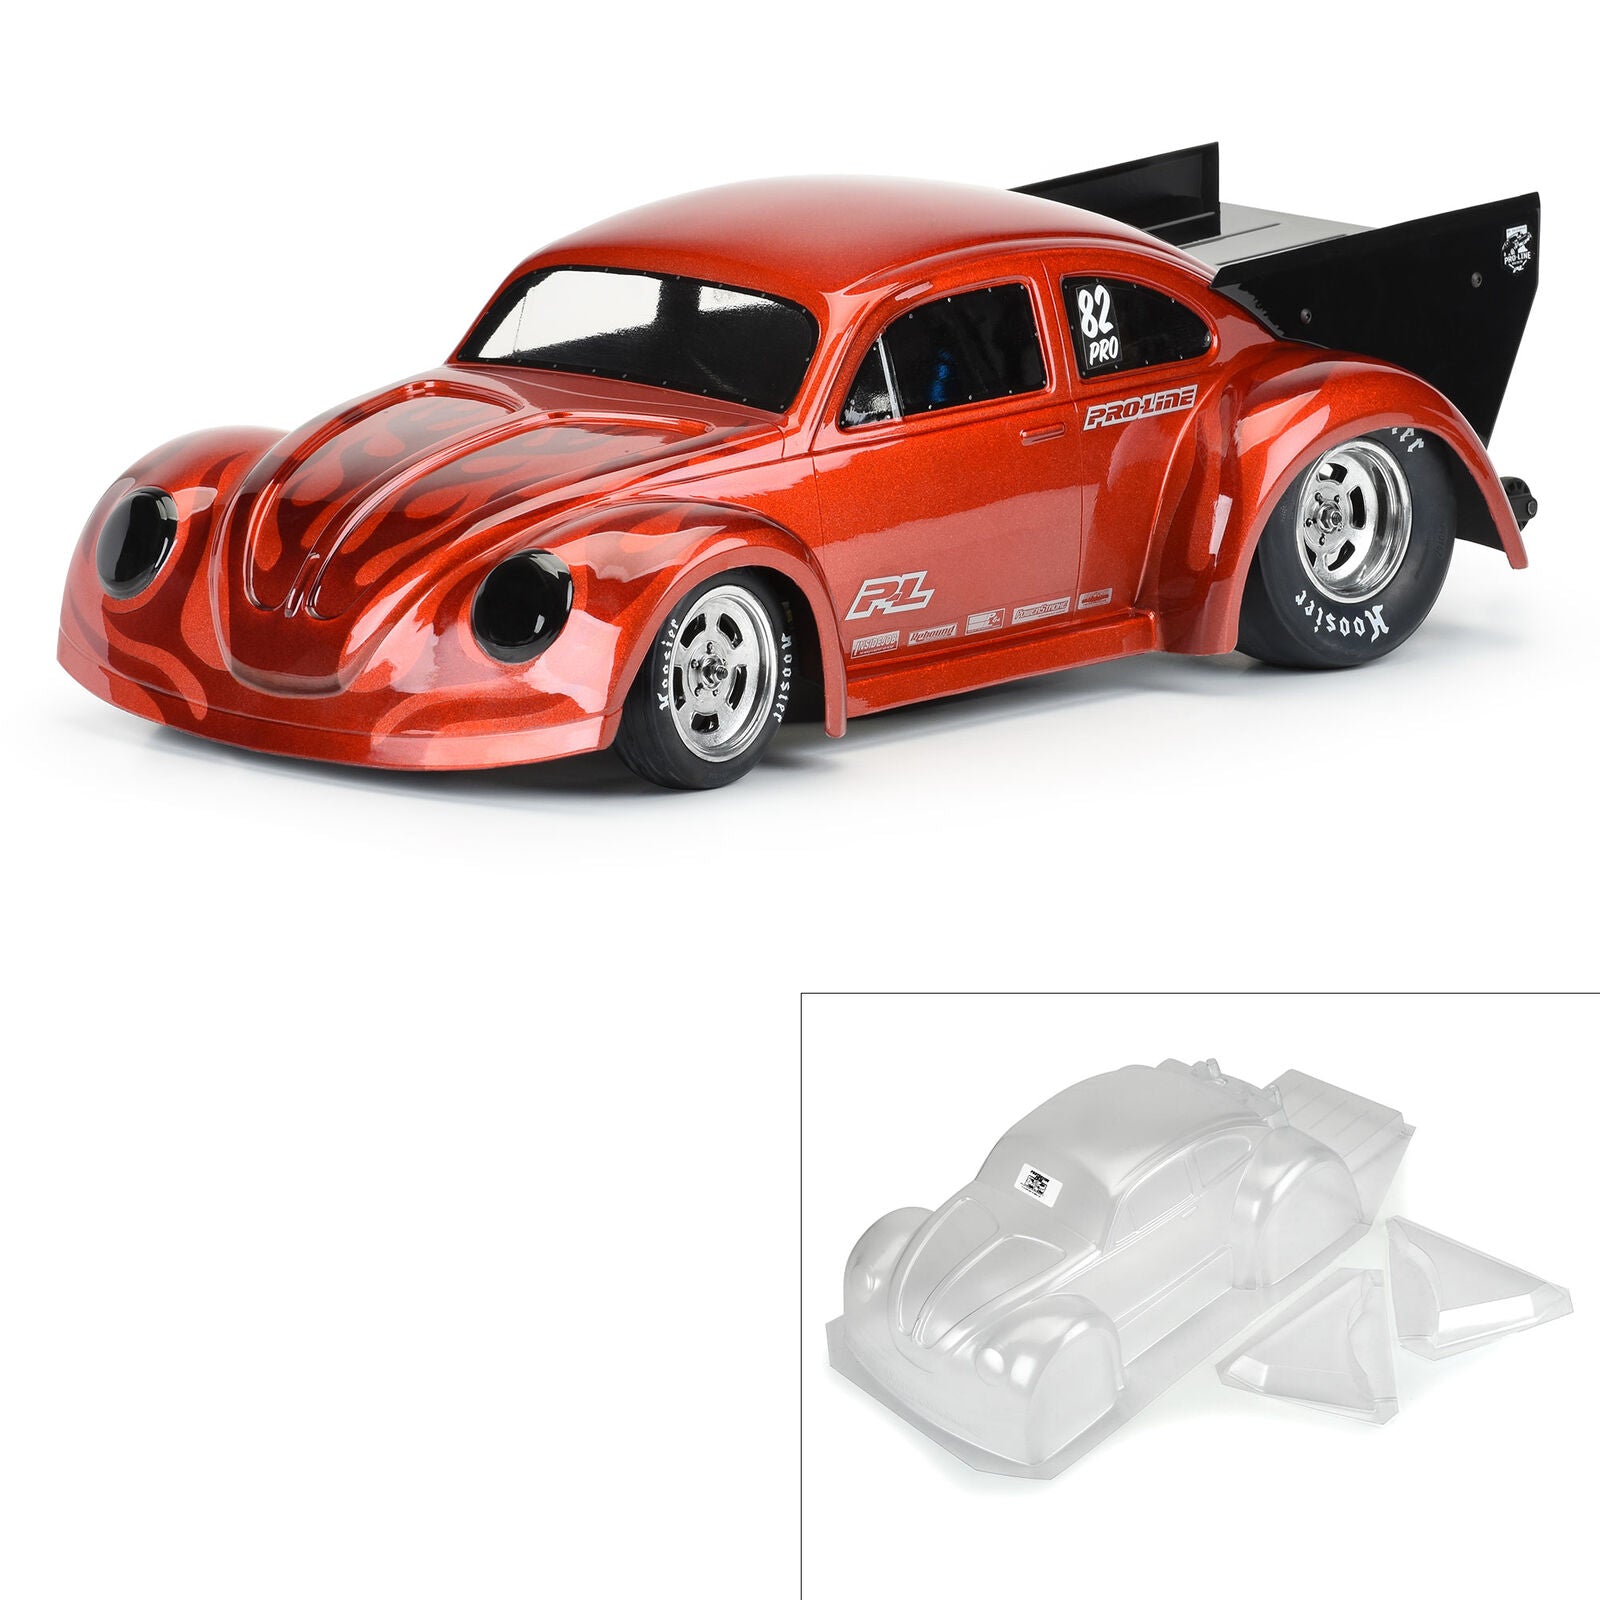 PRO-LINE 1/10 Volkswagen Drag Bug Clear Body: Drag Car